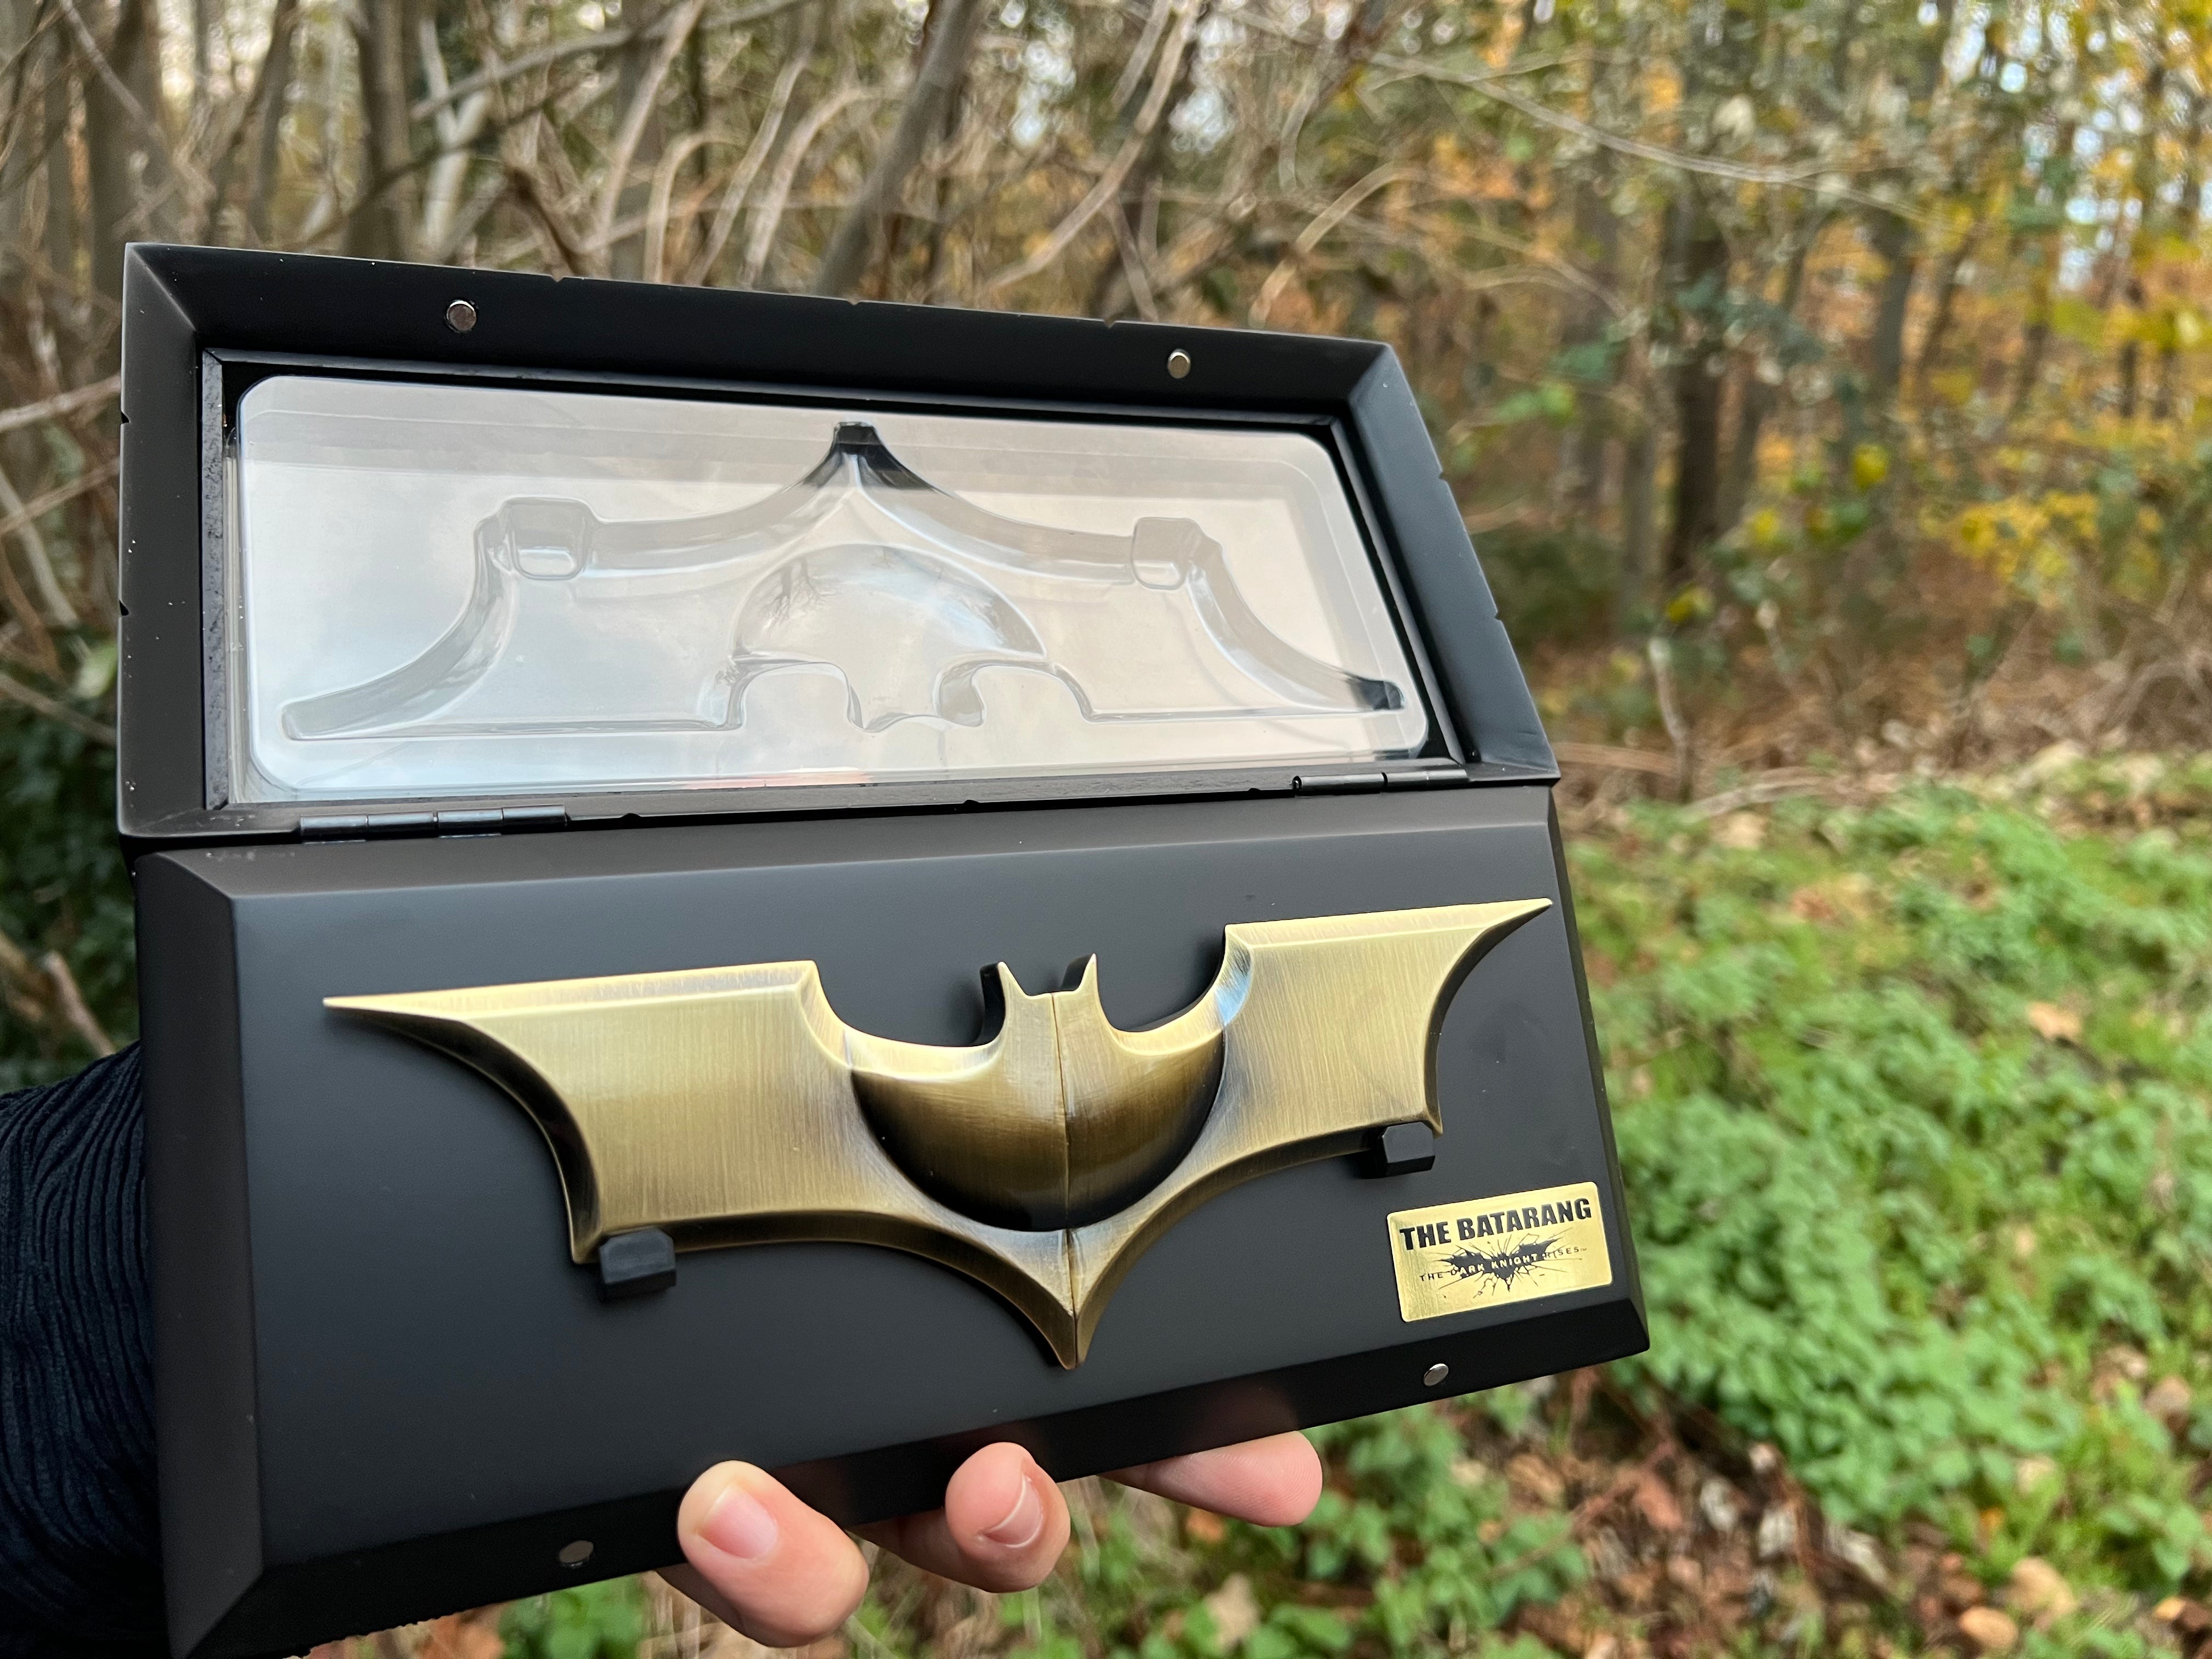 1zu1 Batarang mit Wandhalterung - Batman